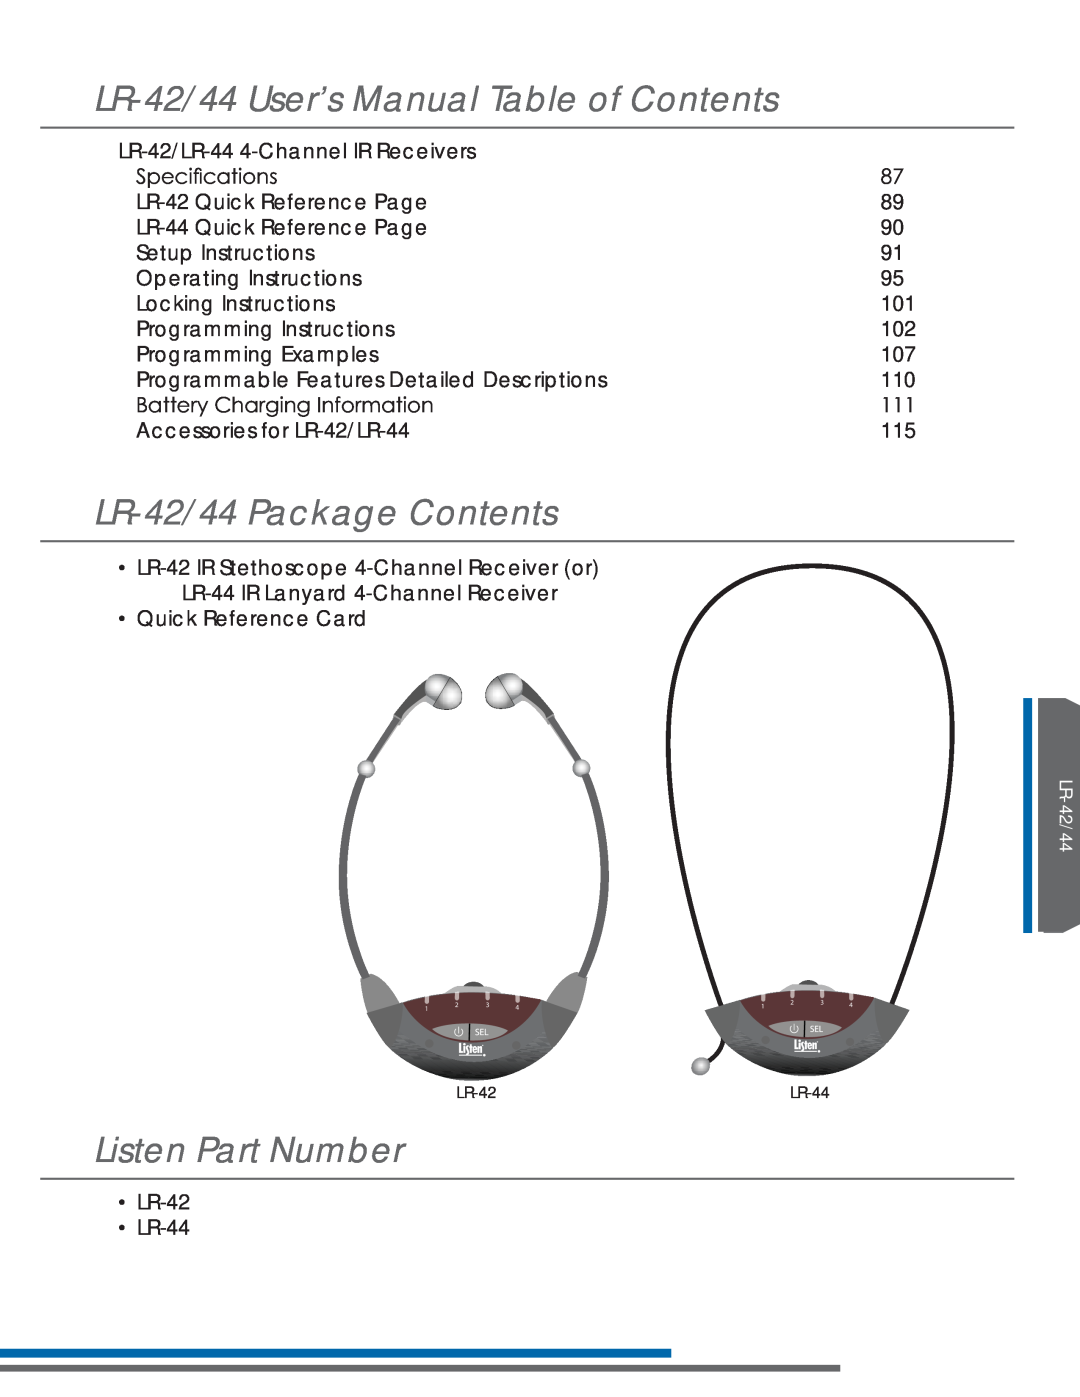 Listen Technologies LR-44, LA-351 LR-42/44User’s Manual Table of Contents, LR-42/44Package Contents, Listen Part Number 